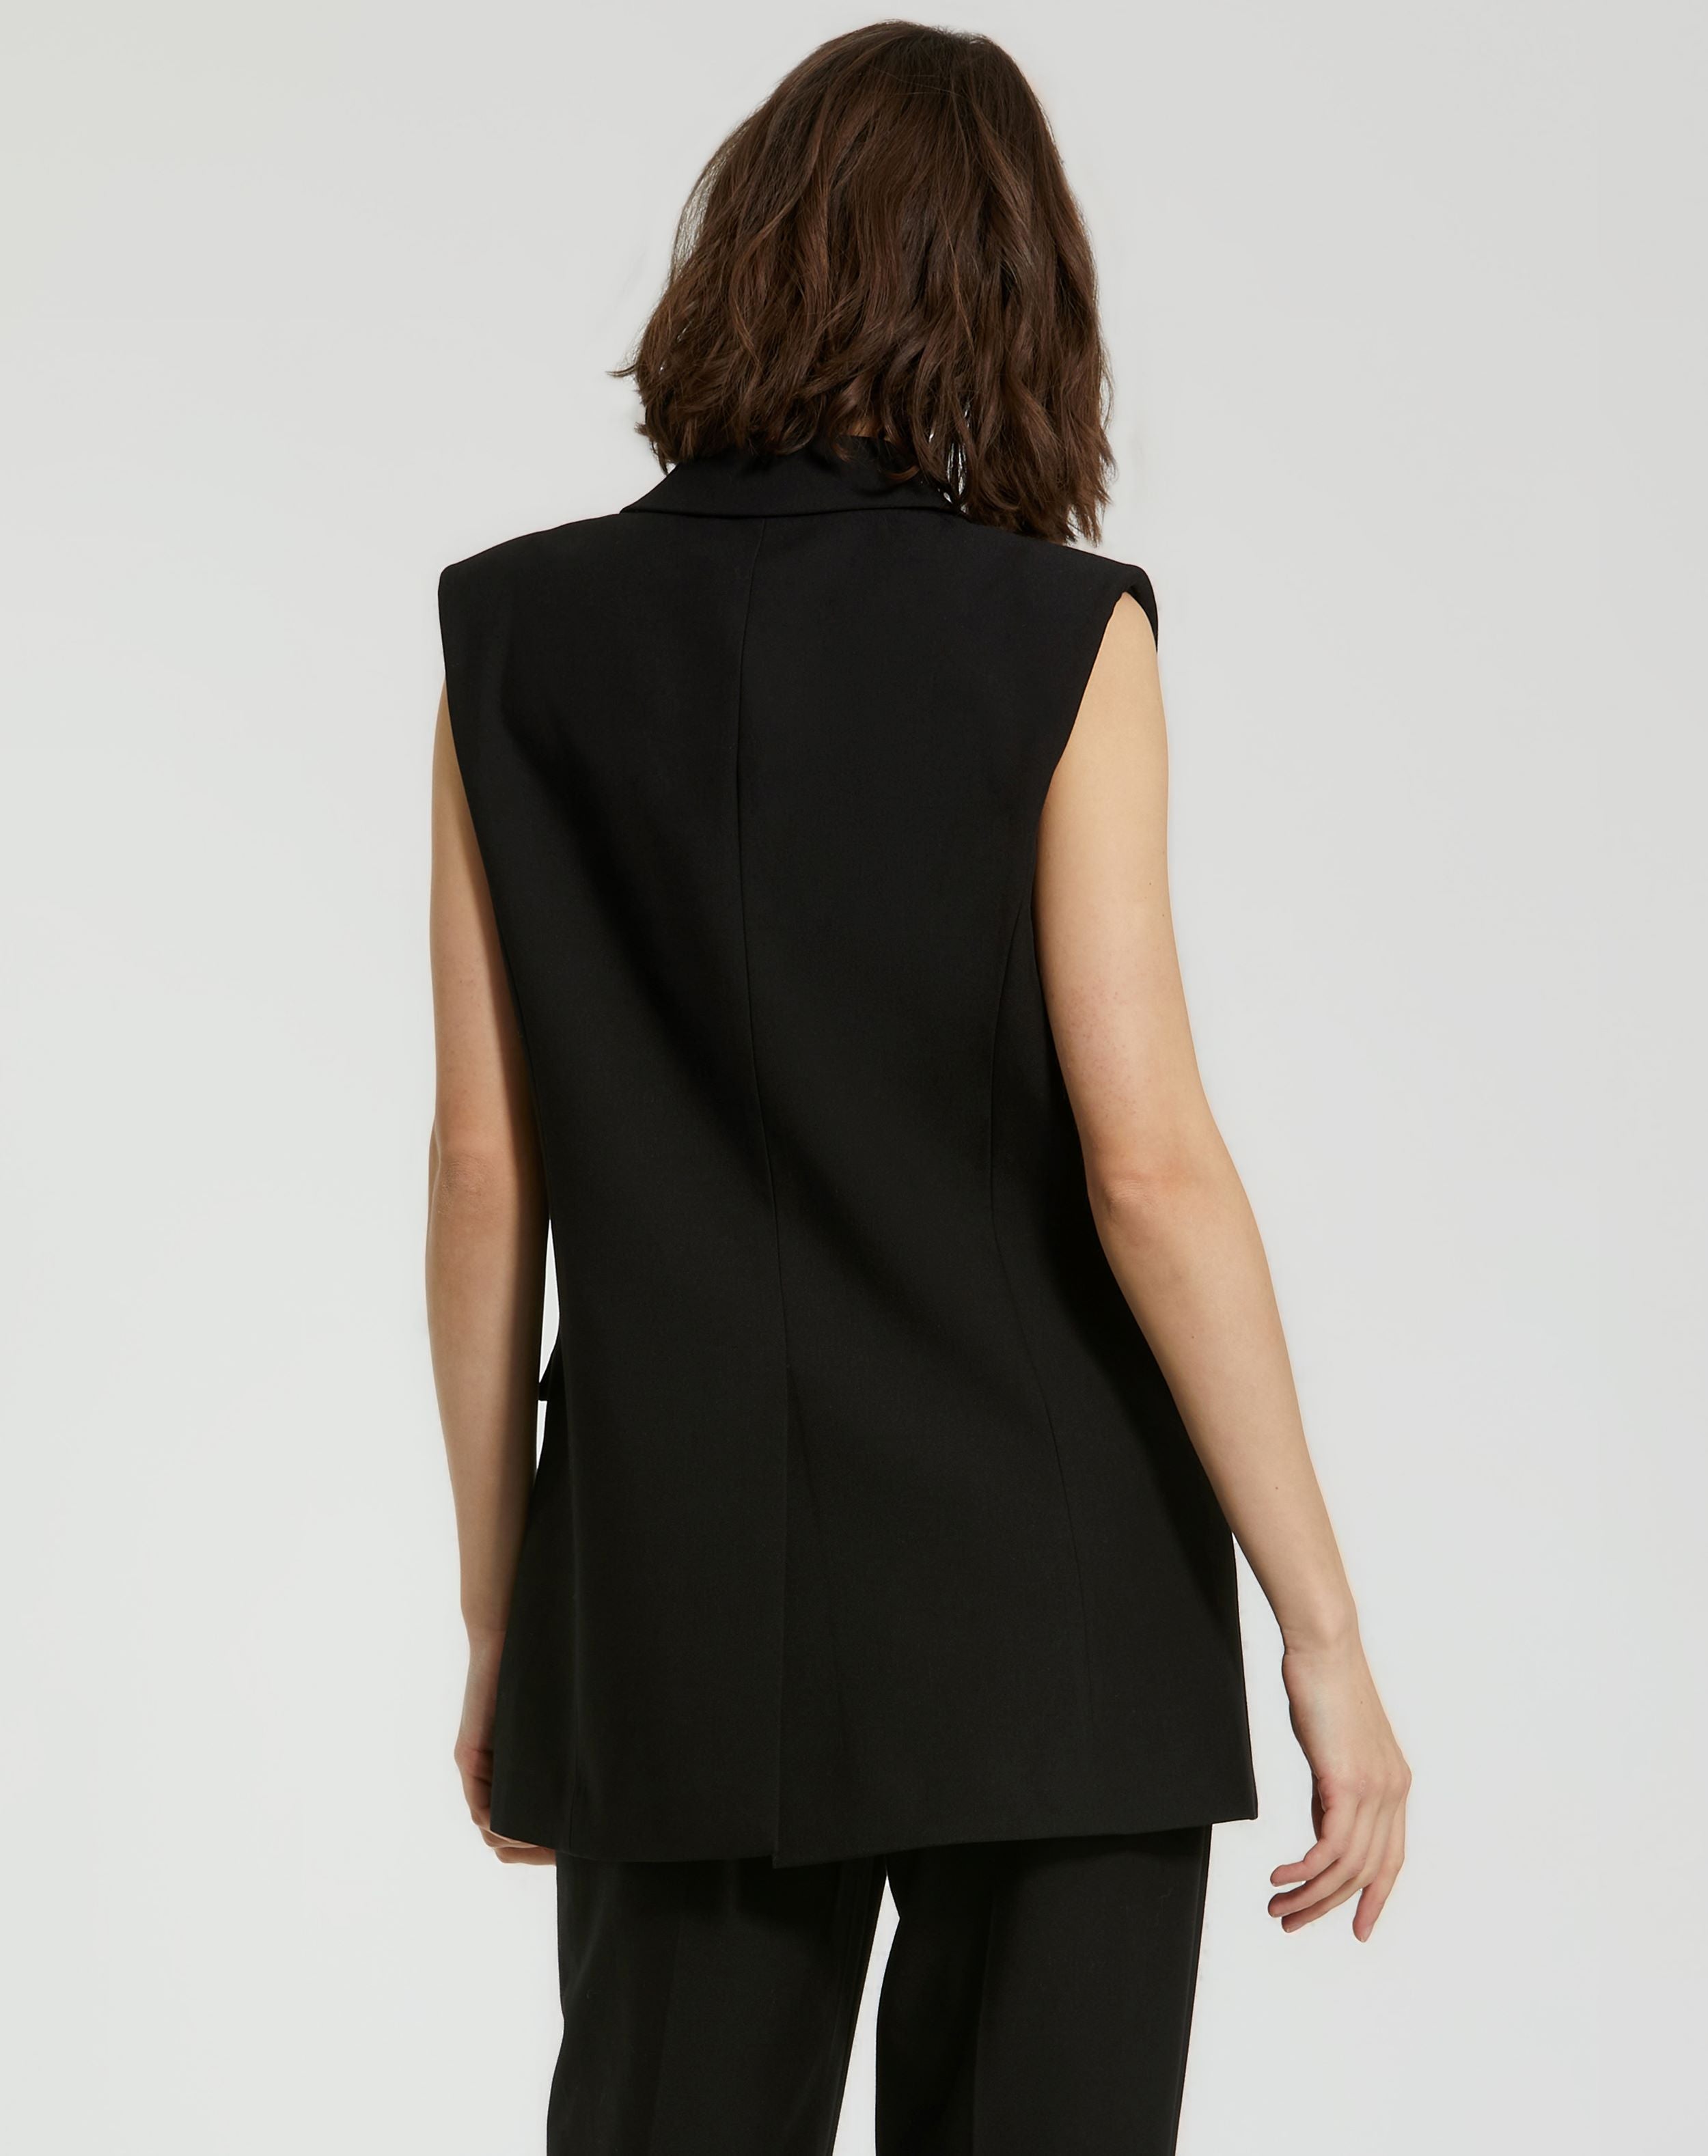 The Ieena Tailored Sleeveless Blazer Vest